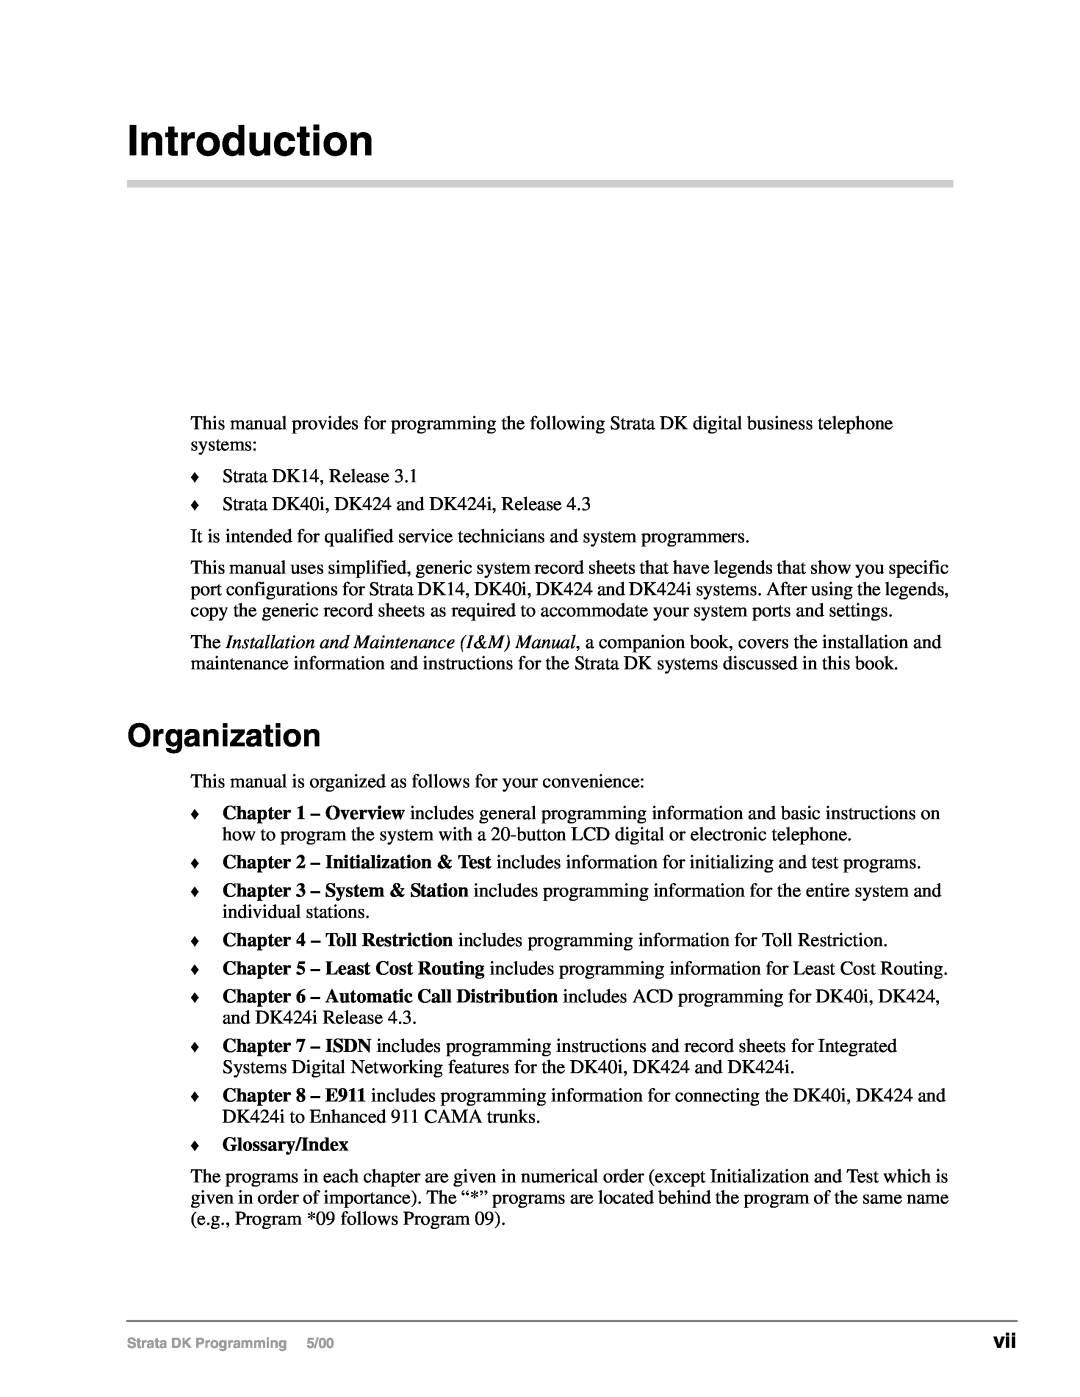 Toshiba dk14, DK40I, DK424I manual Introduction, Organization, Glossary/Index 